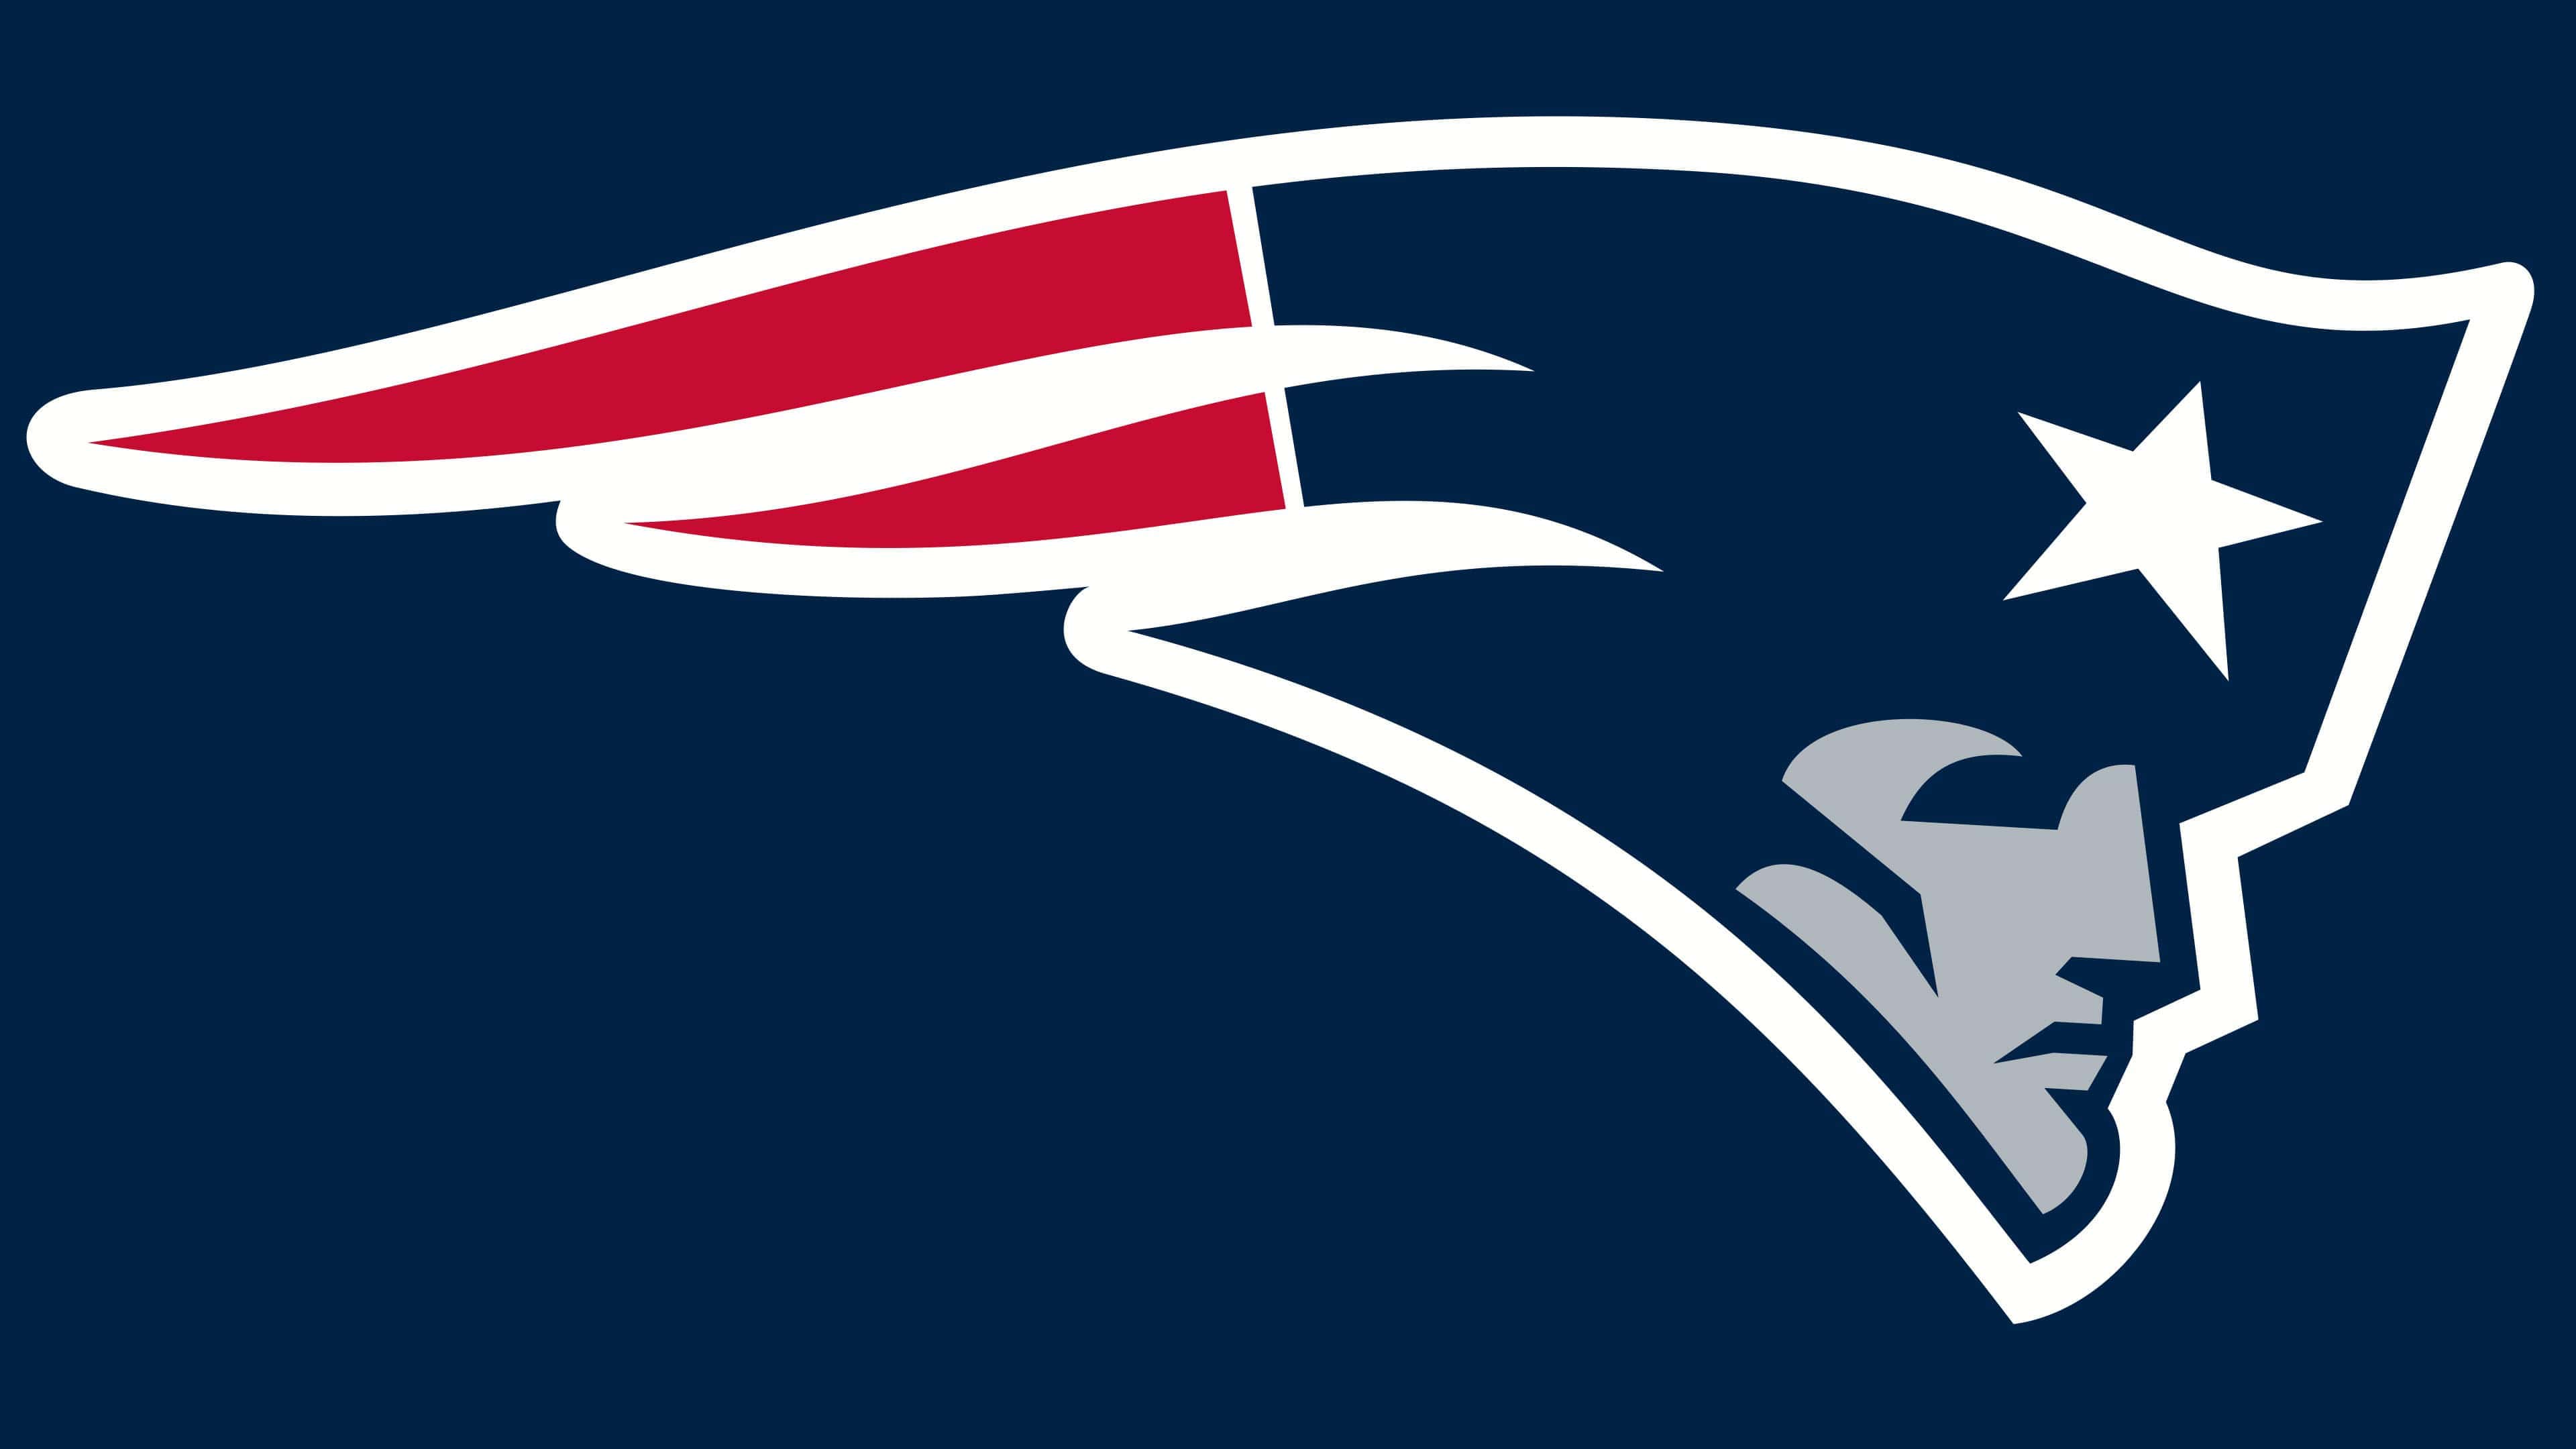 New England Sports Logos